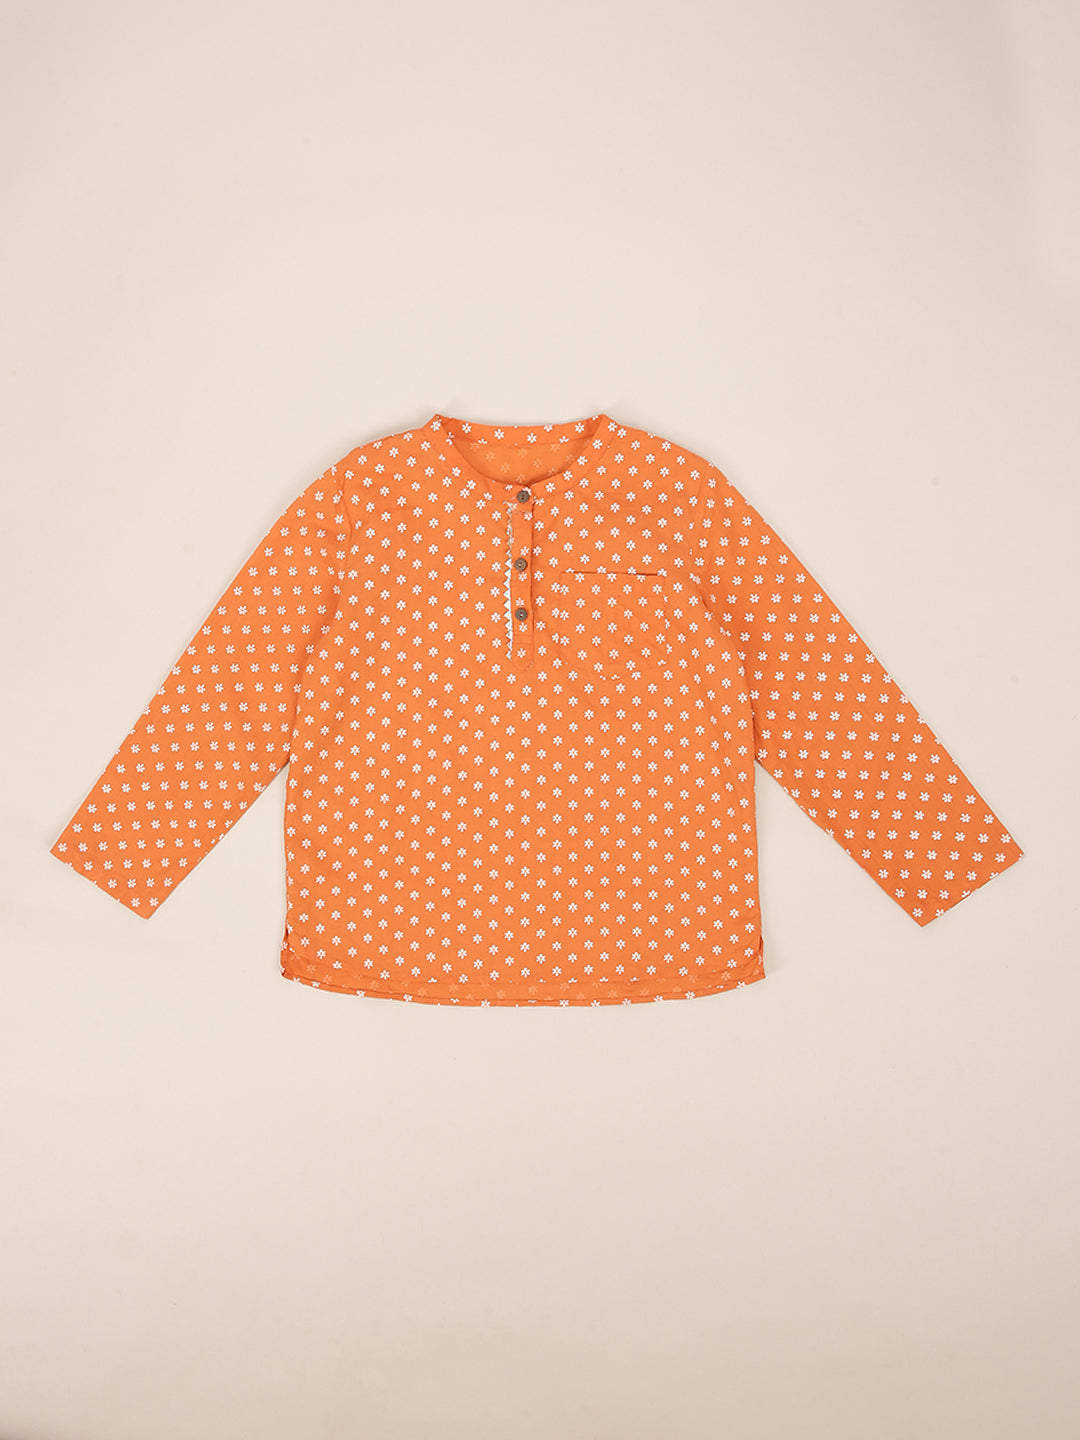 Boys Cotton Shirt Full Sleeves Orange - 2 yrs to 12 yrs - Front